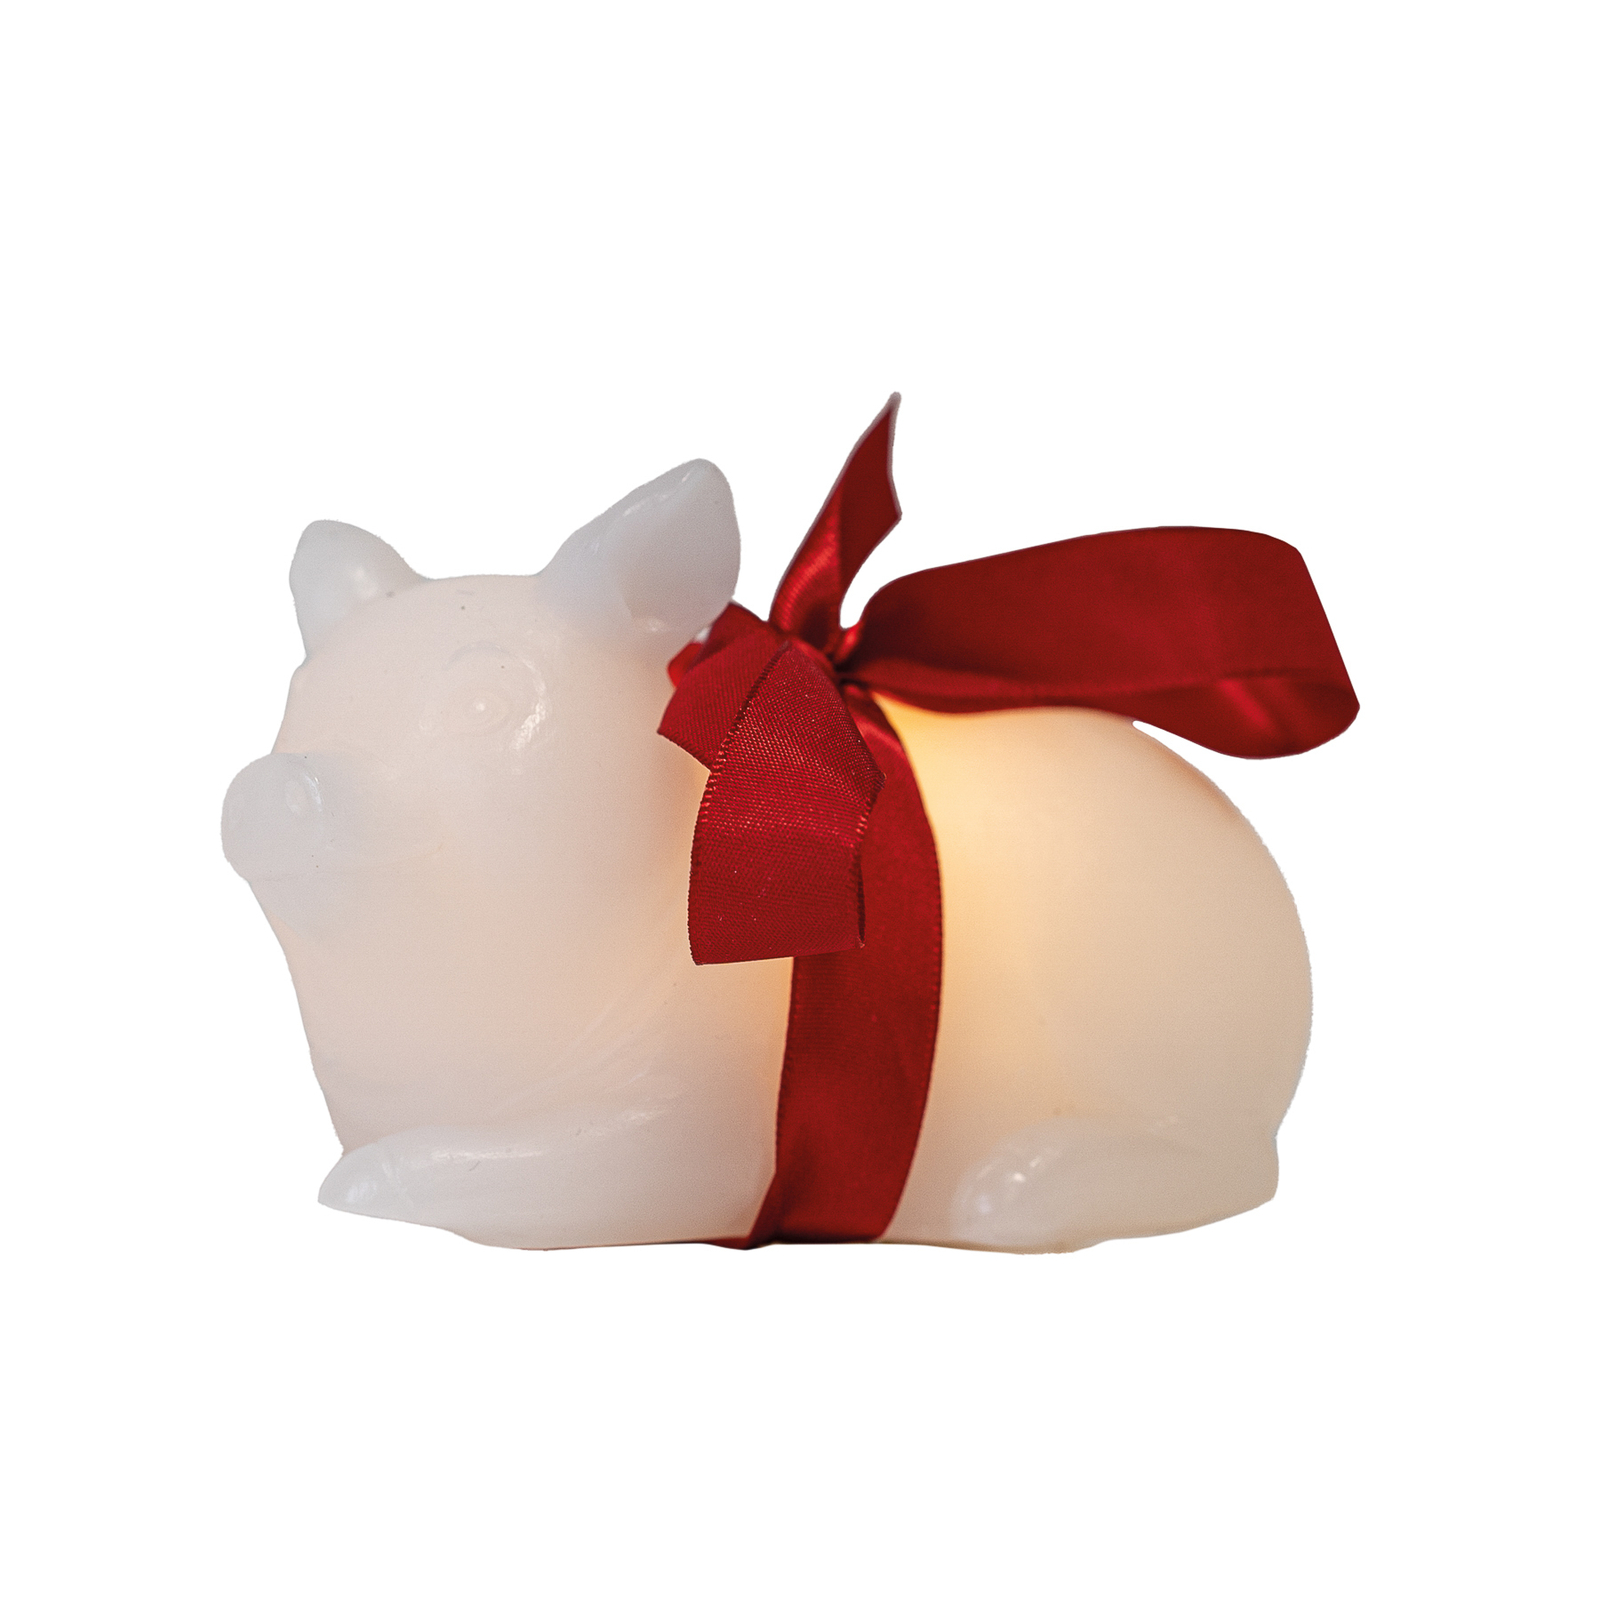 Emma Pig LED decorative light made of wax